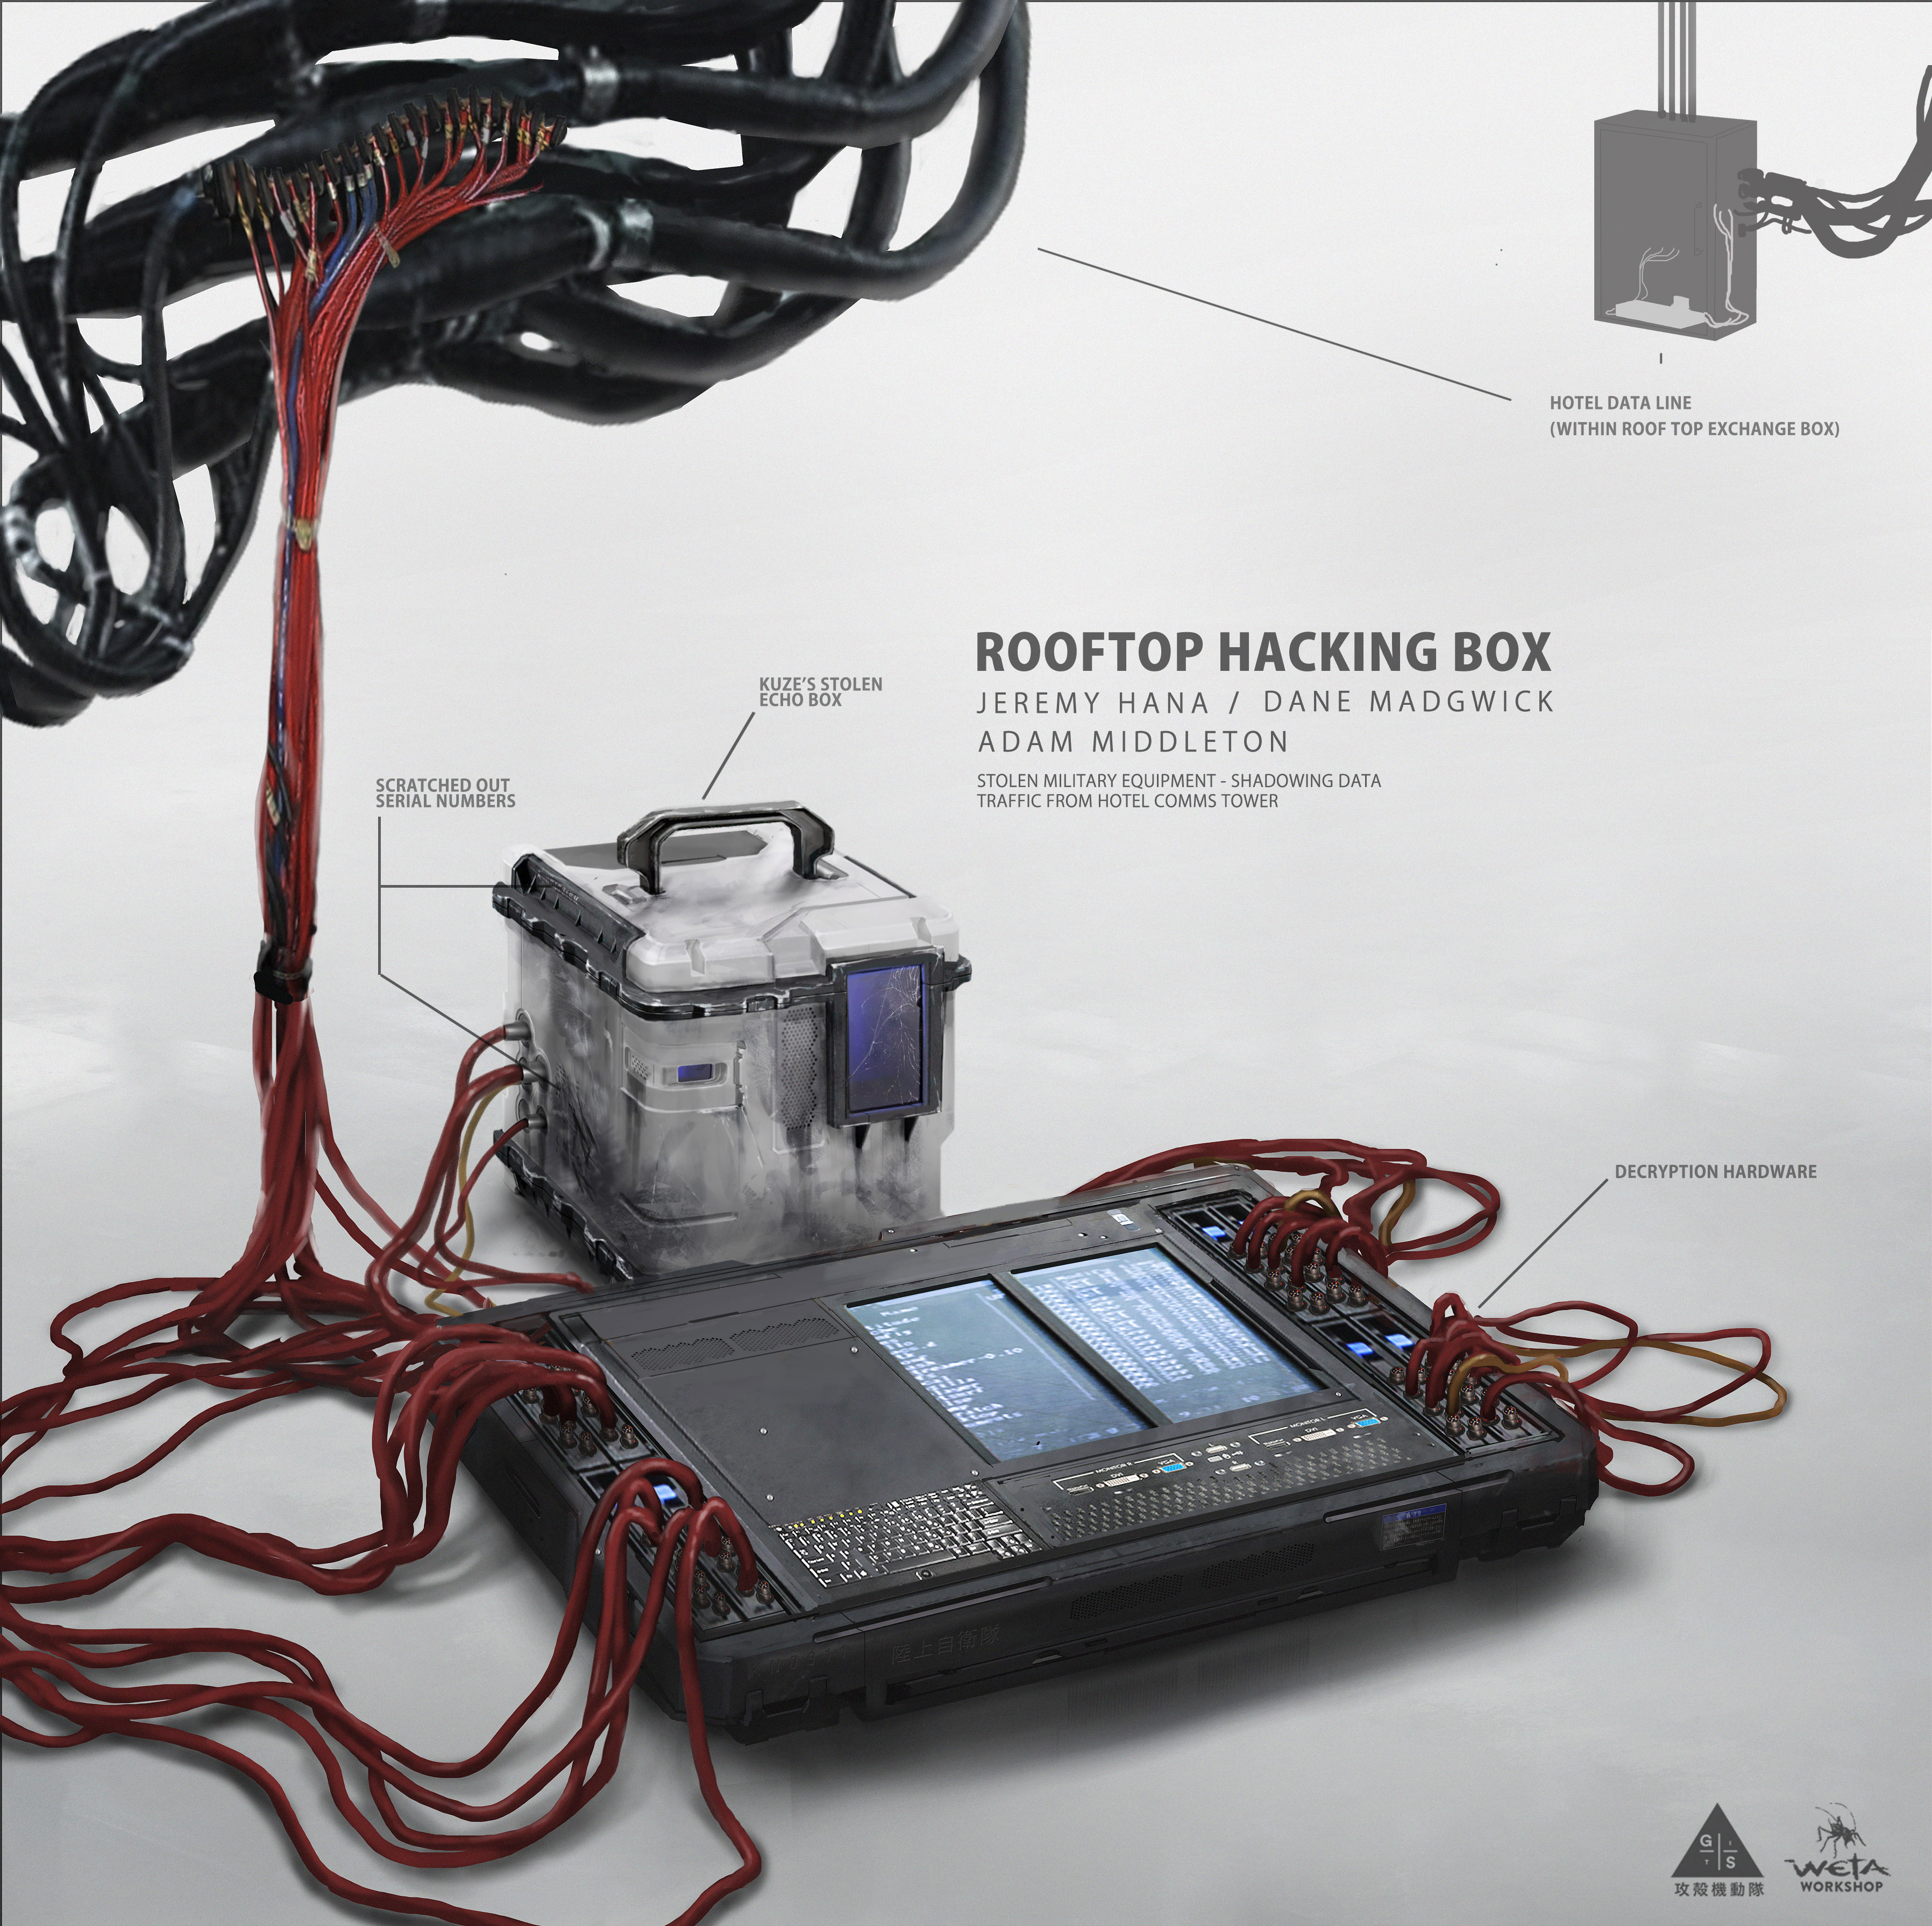 Rooftop Hacking Box - Artists: Dane Madgwick + Jeremy Hanna + Adam Middleton